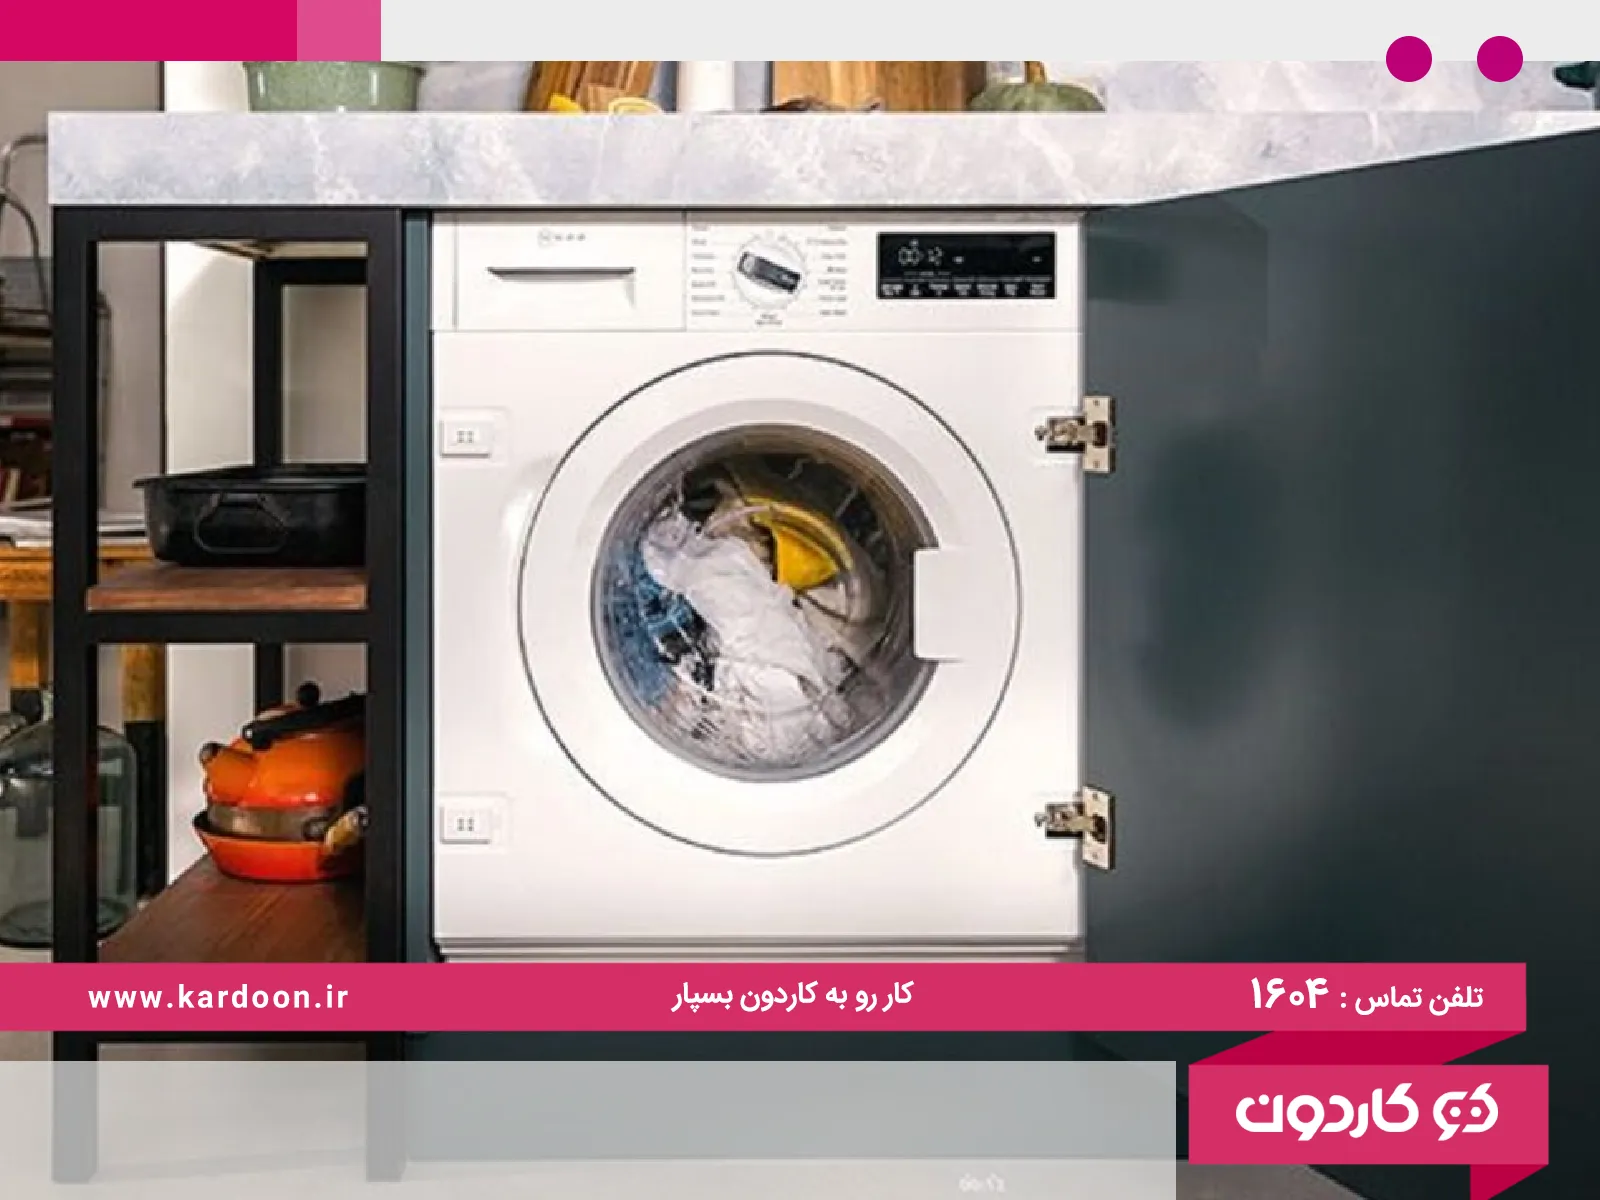 A guide to using neff washing machine